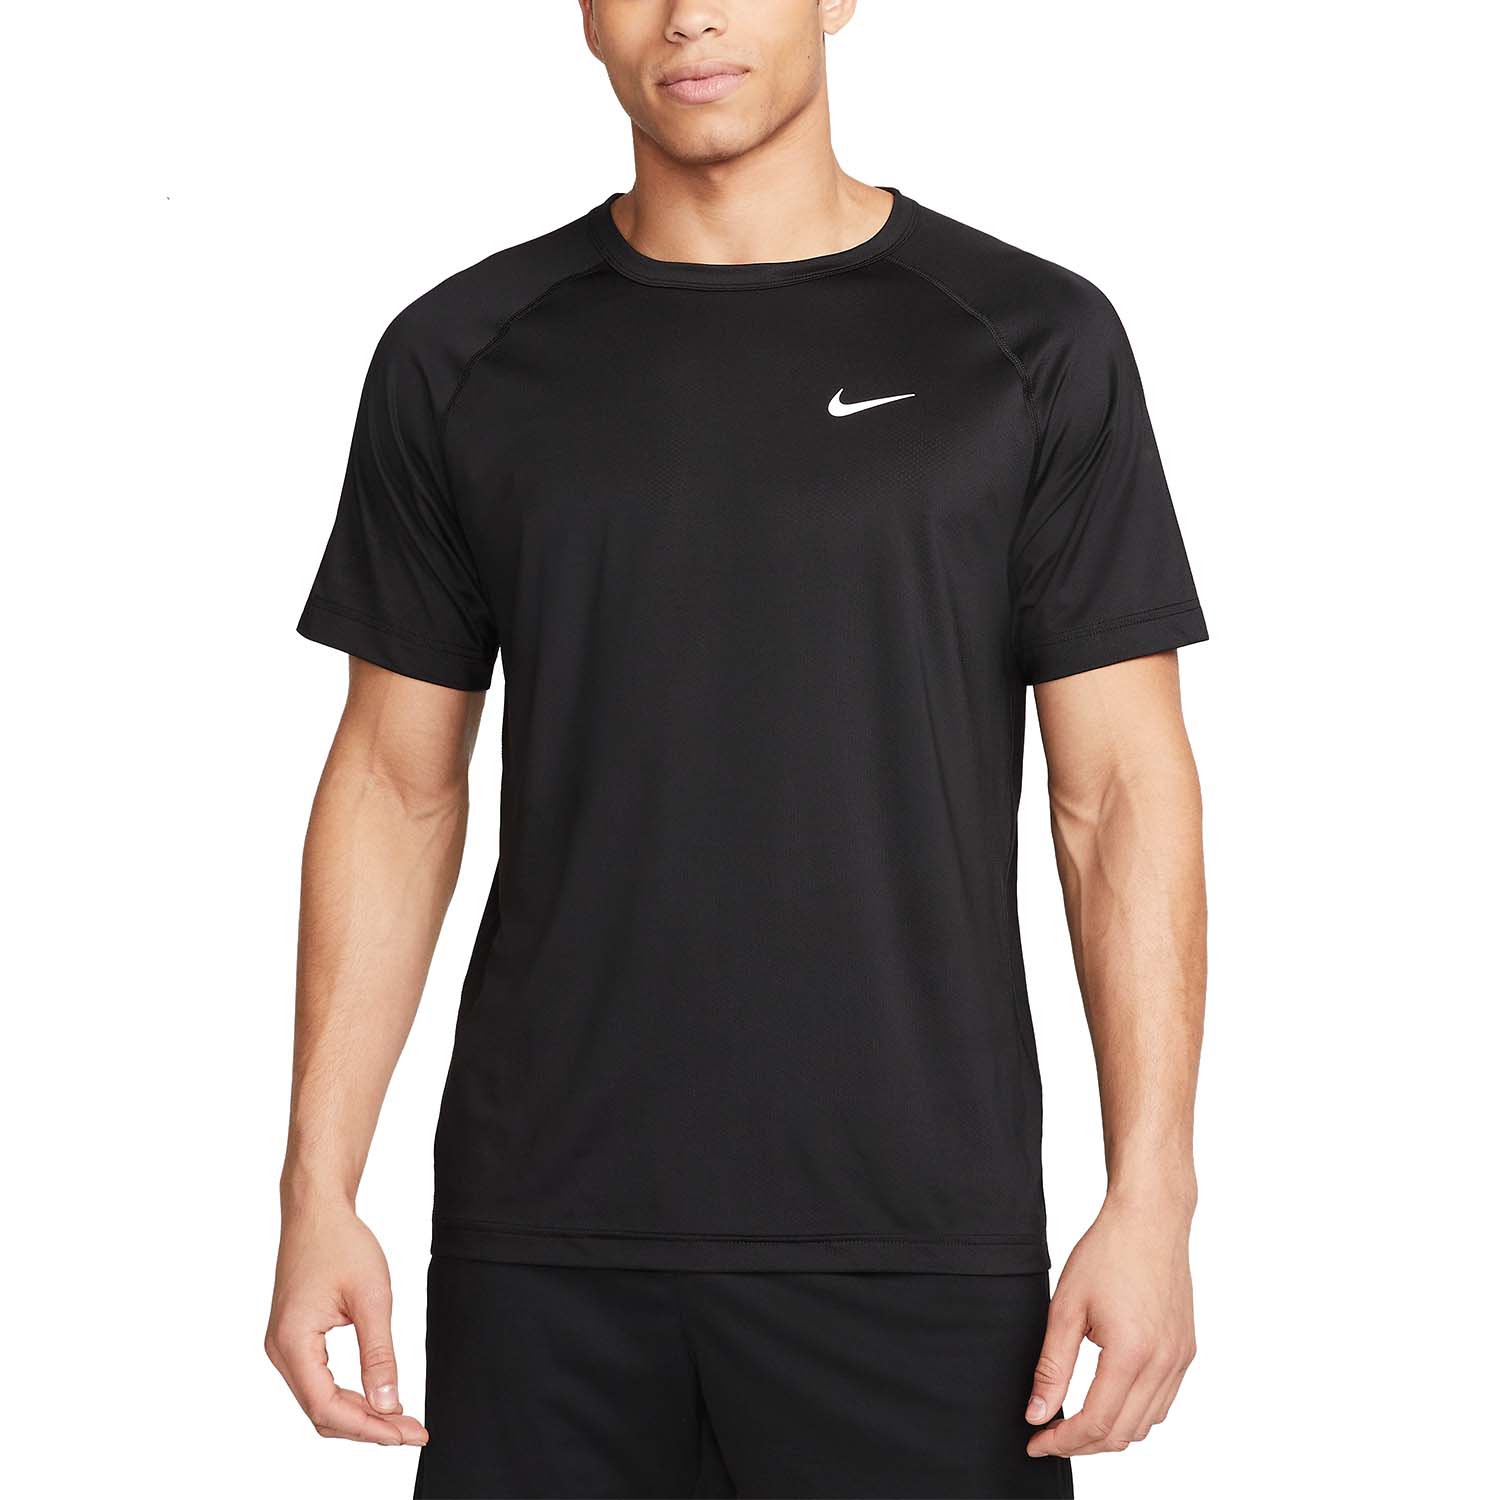 Nike Dri-FIT Ready Camiseta - Black/Cool Grey/White